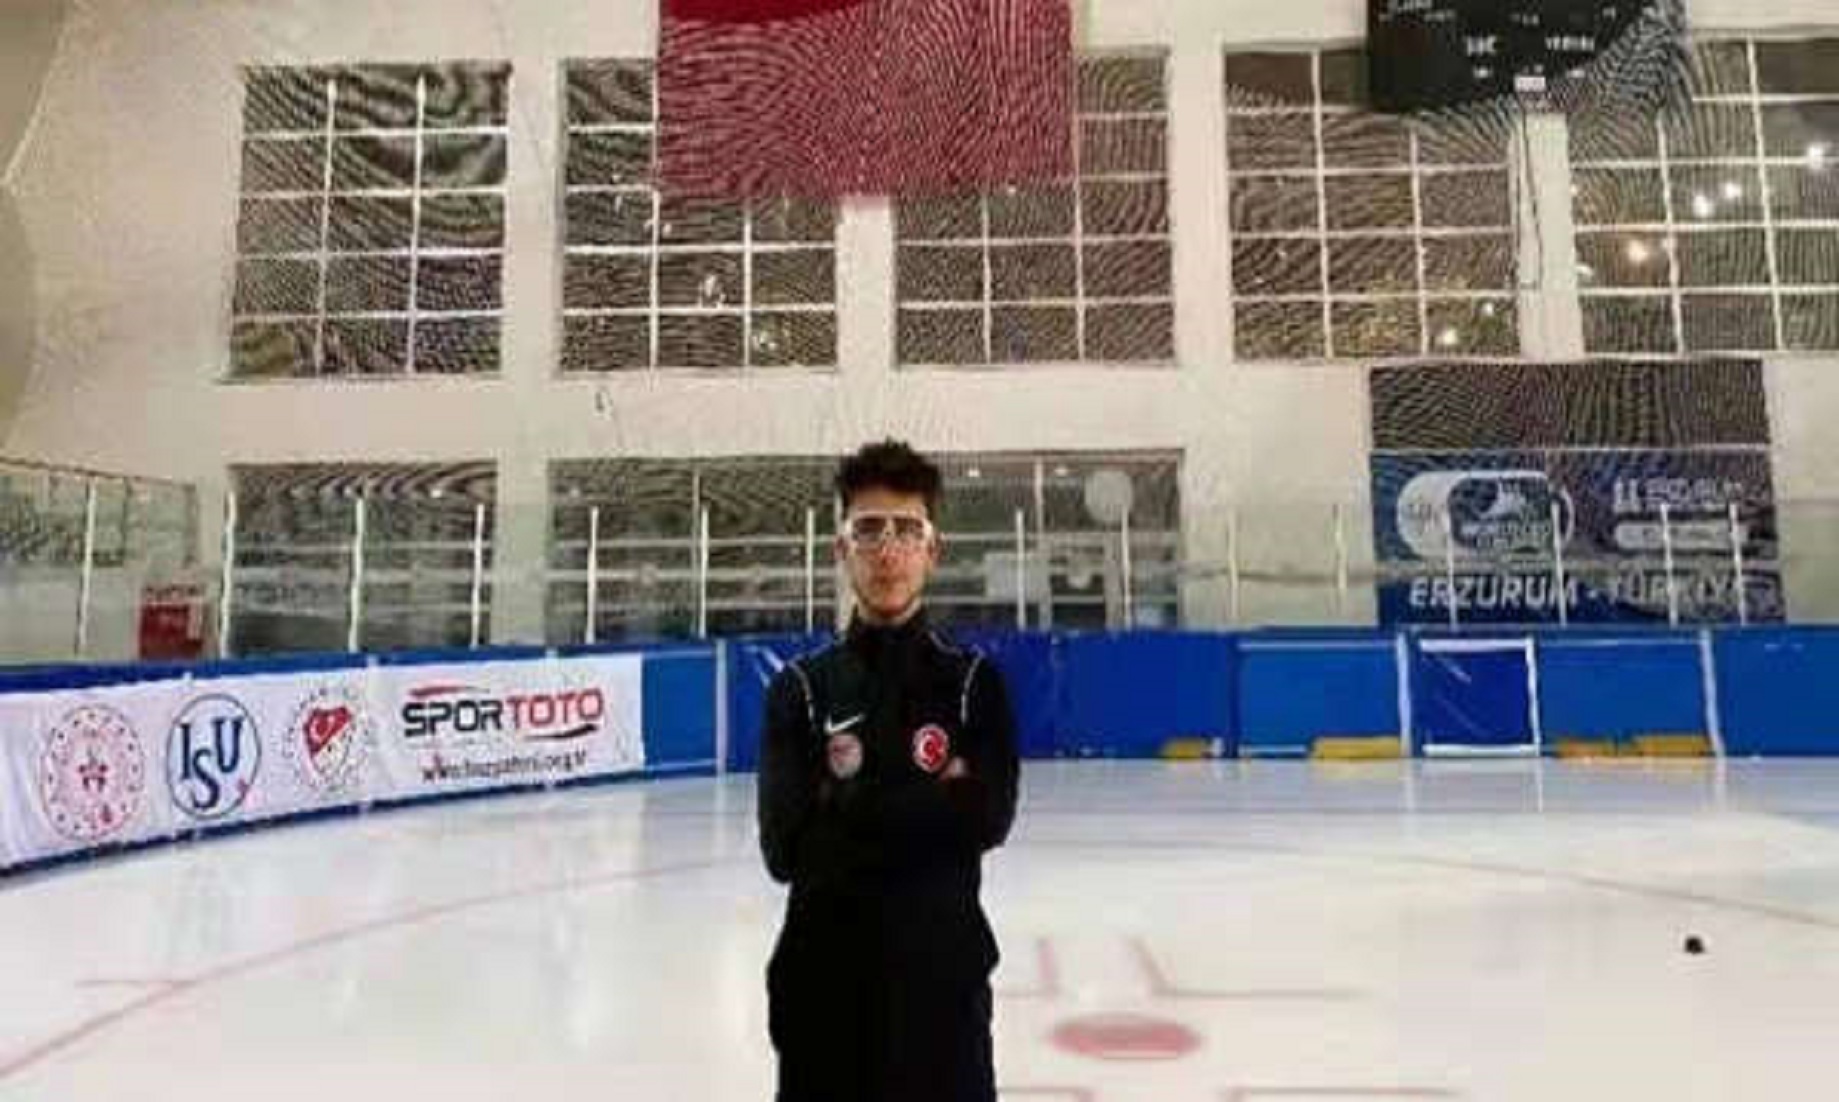 Speed Skater Aspires To Pioneer Youth Sports In Turkey Via Beijing Winter Olympics